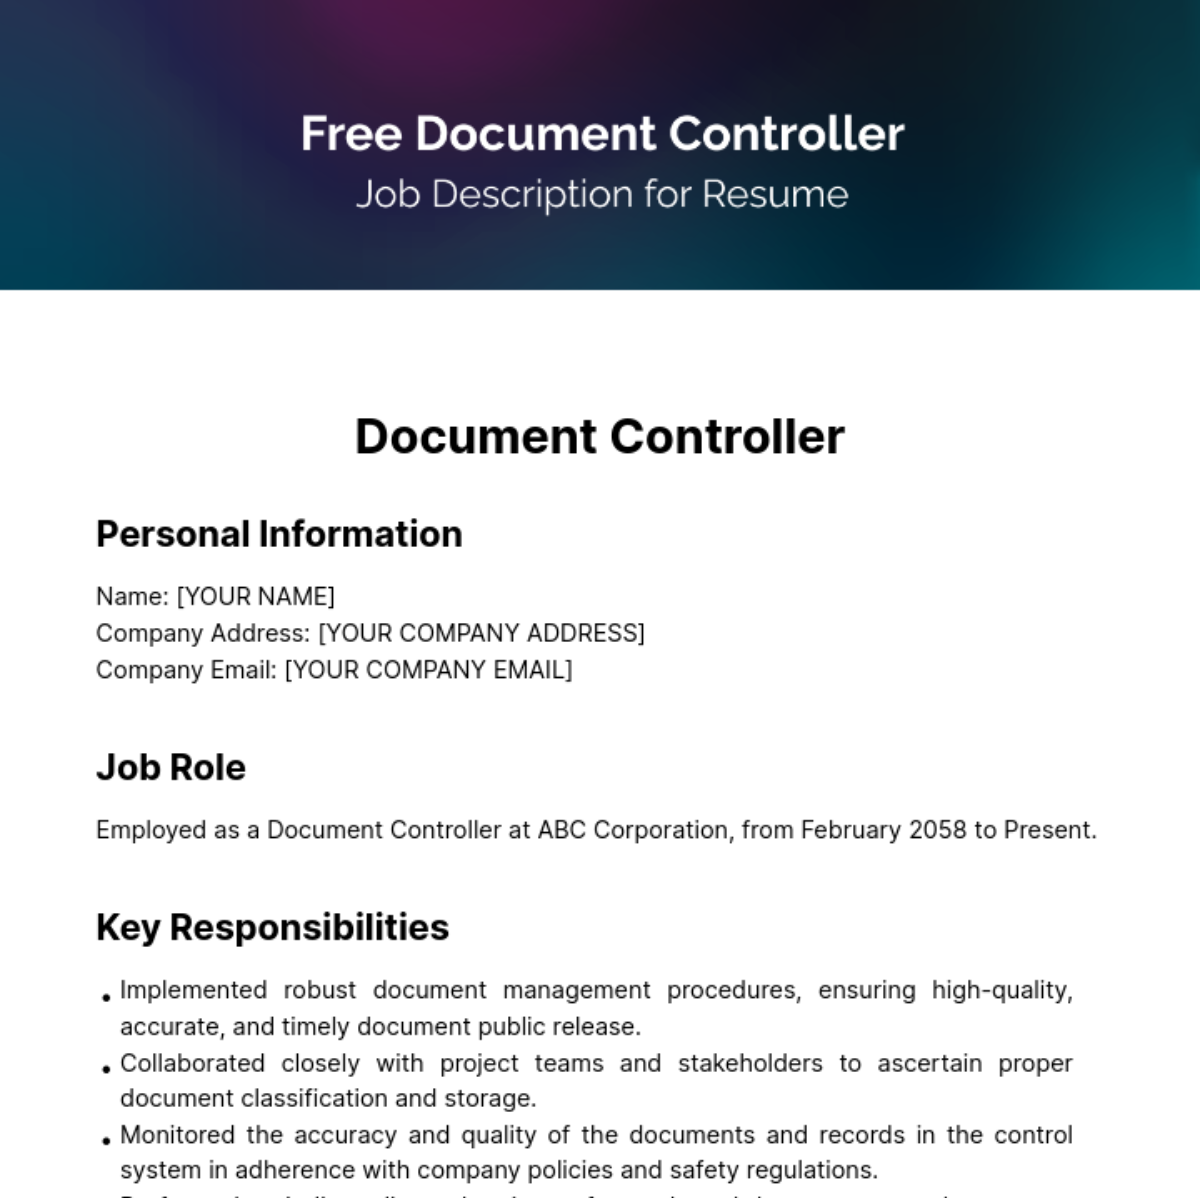 Document Controller Job Description for Resume Template